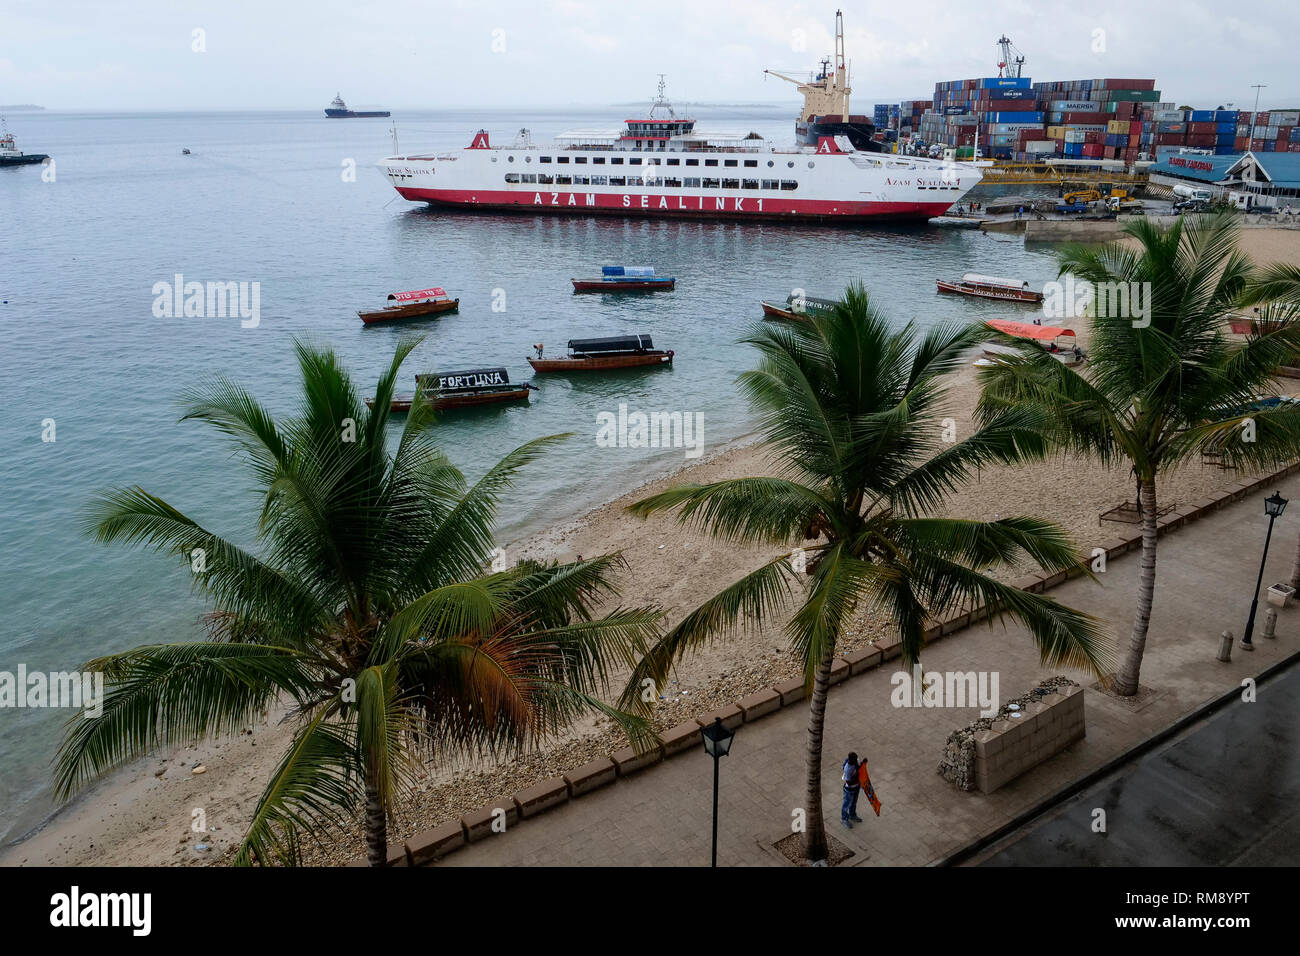 TANZANIA, Zanzibar, Stone town, container seaport and Azam Sealink passenger car ferry to mainland Stock Photo